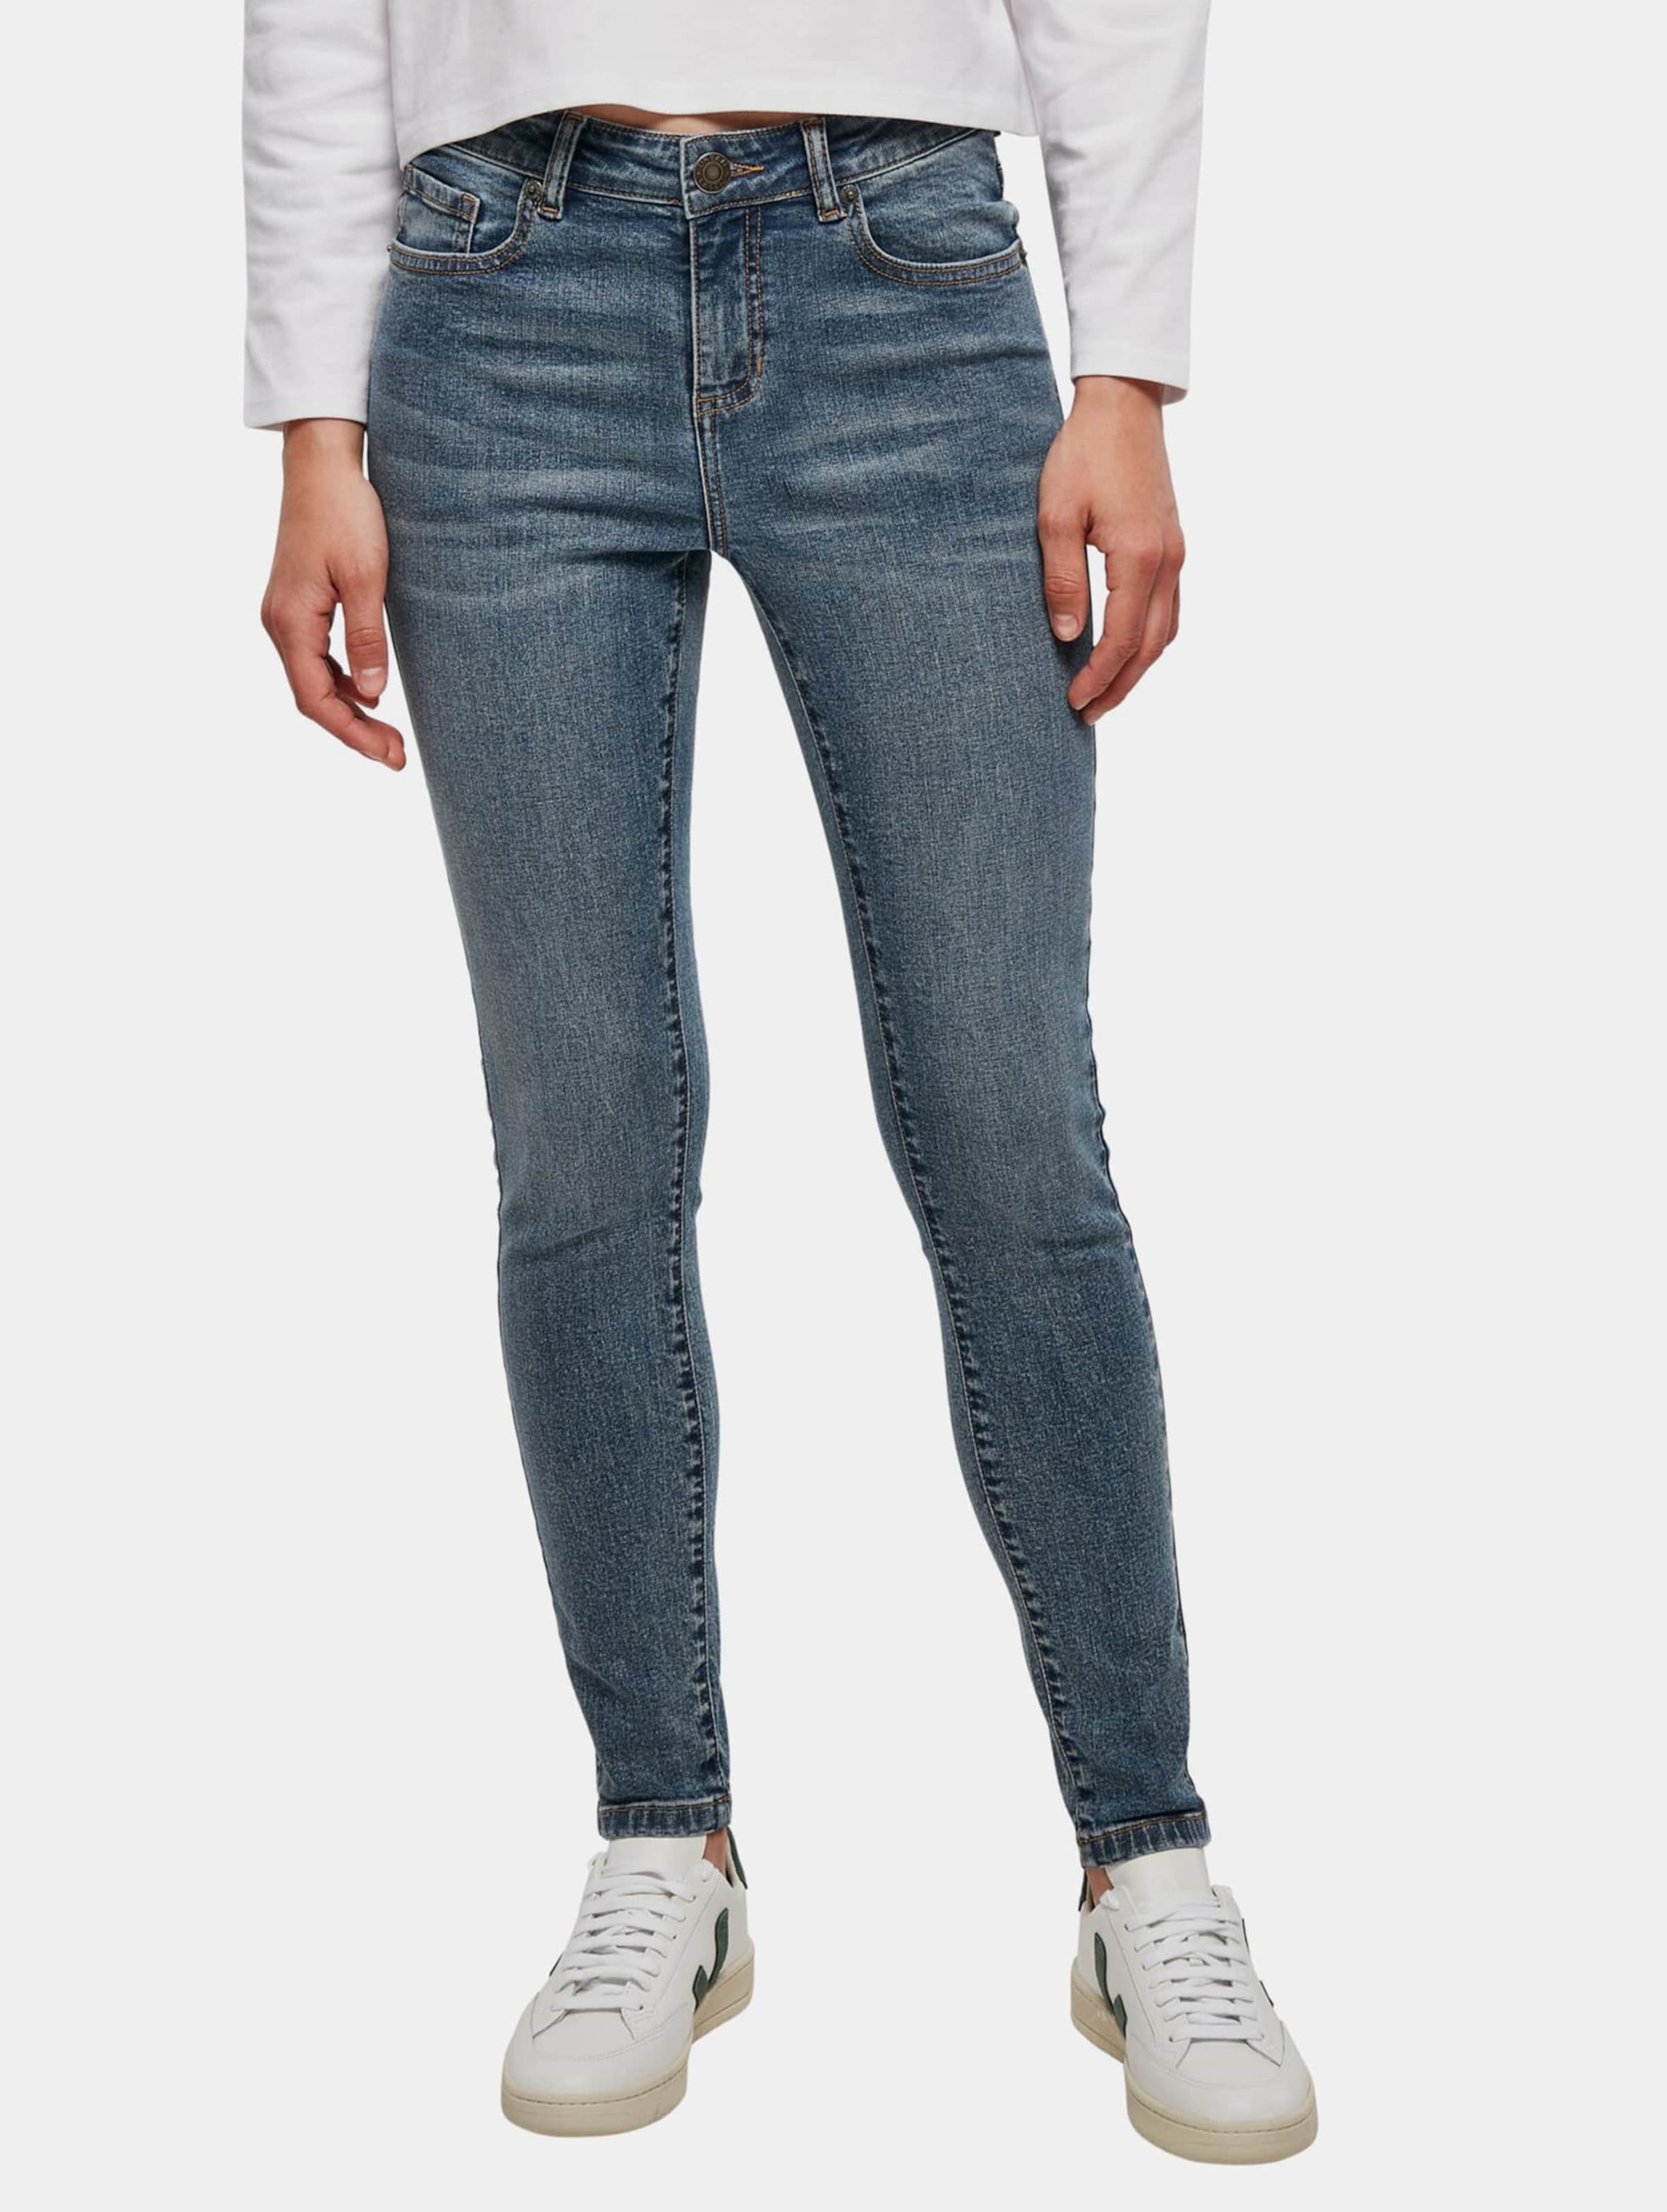 Urban Classics Ladies Mid Waist Skinny Jeans product